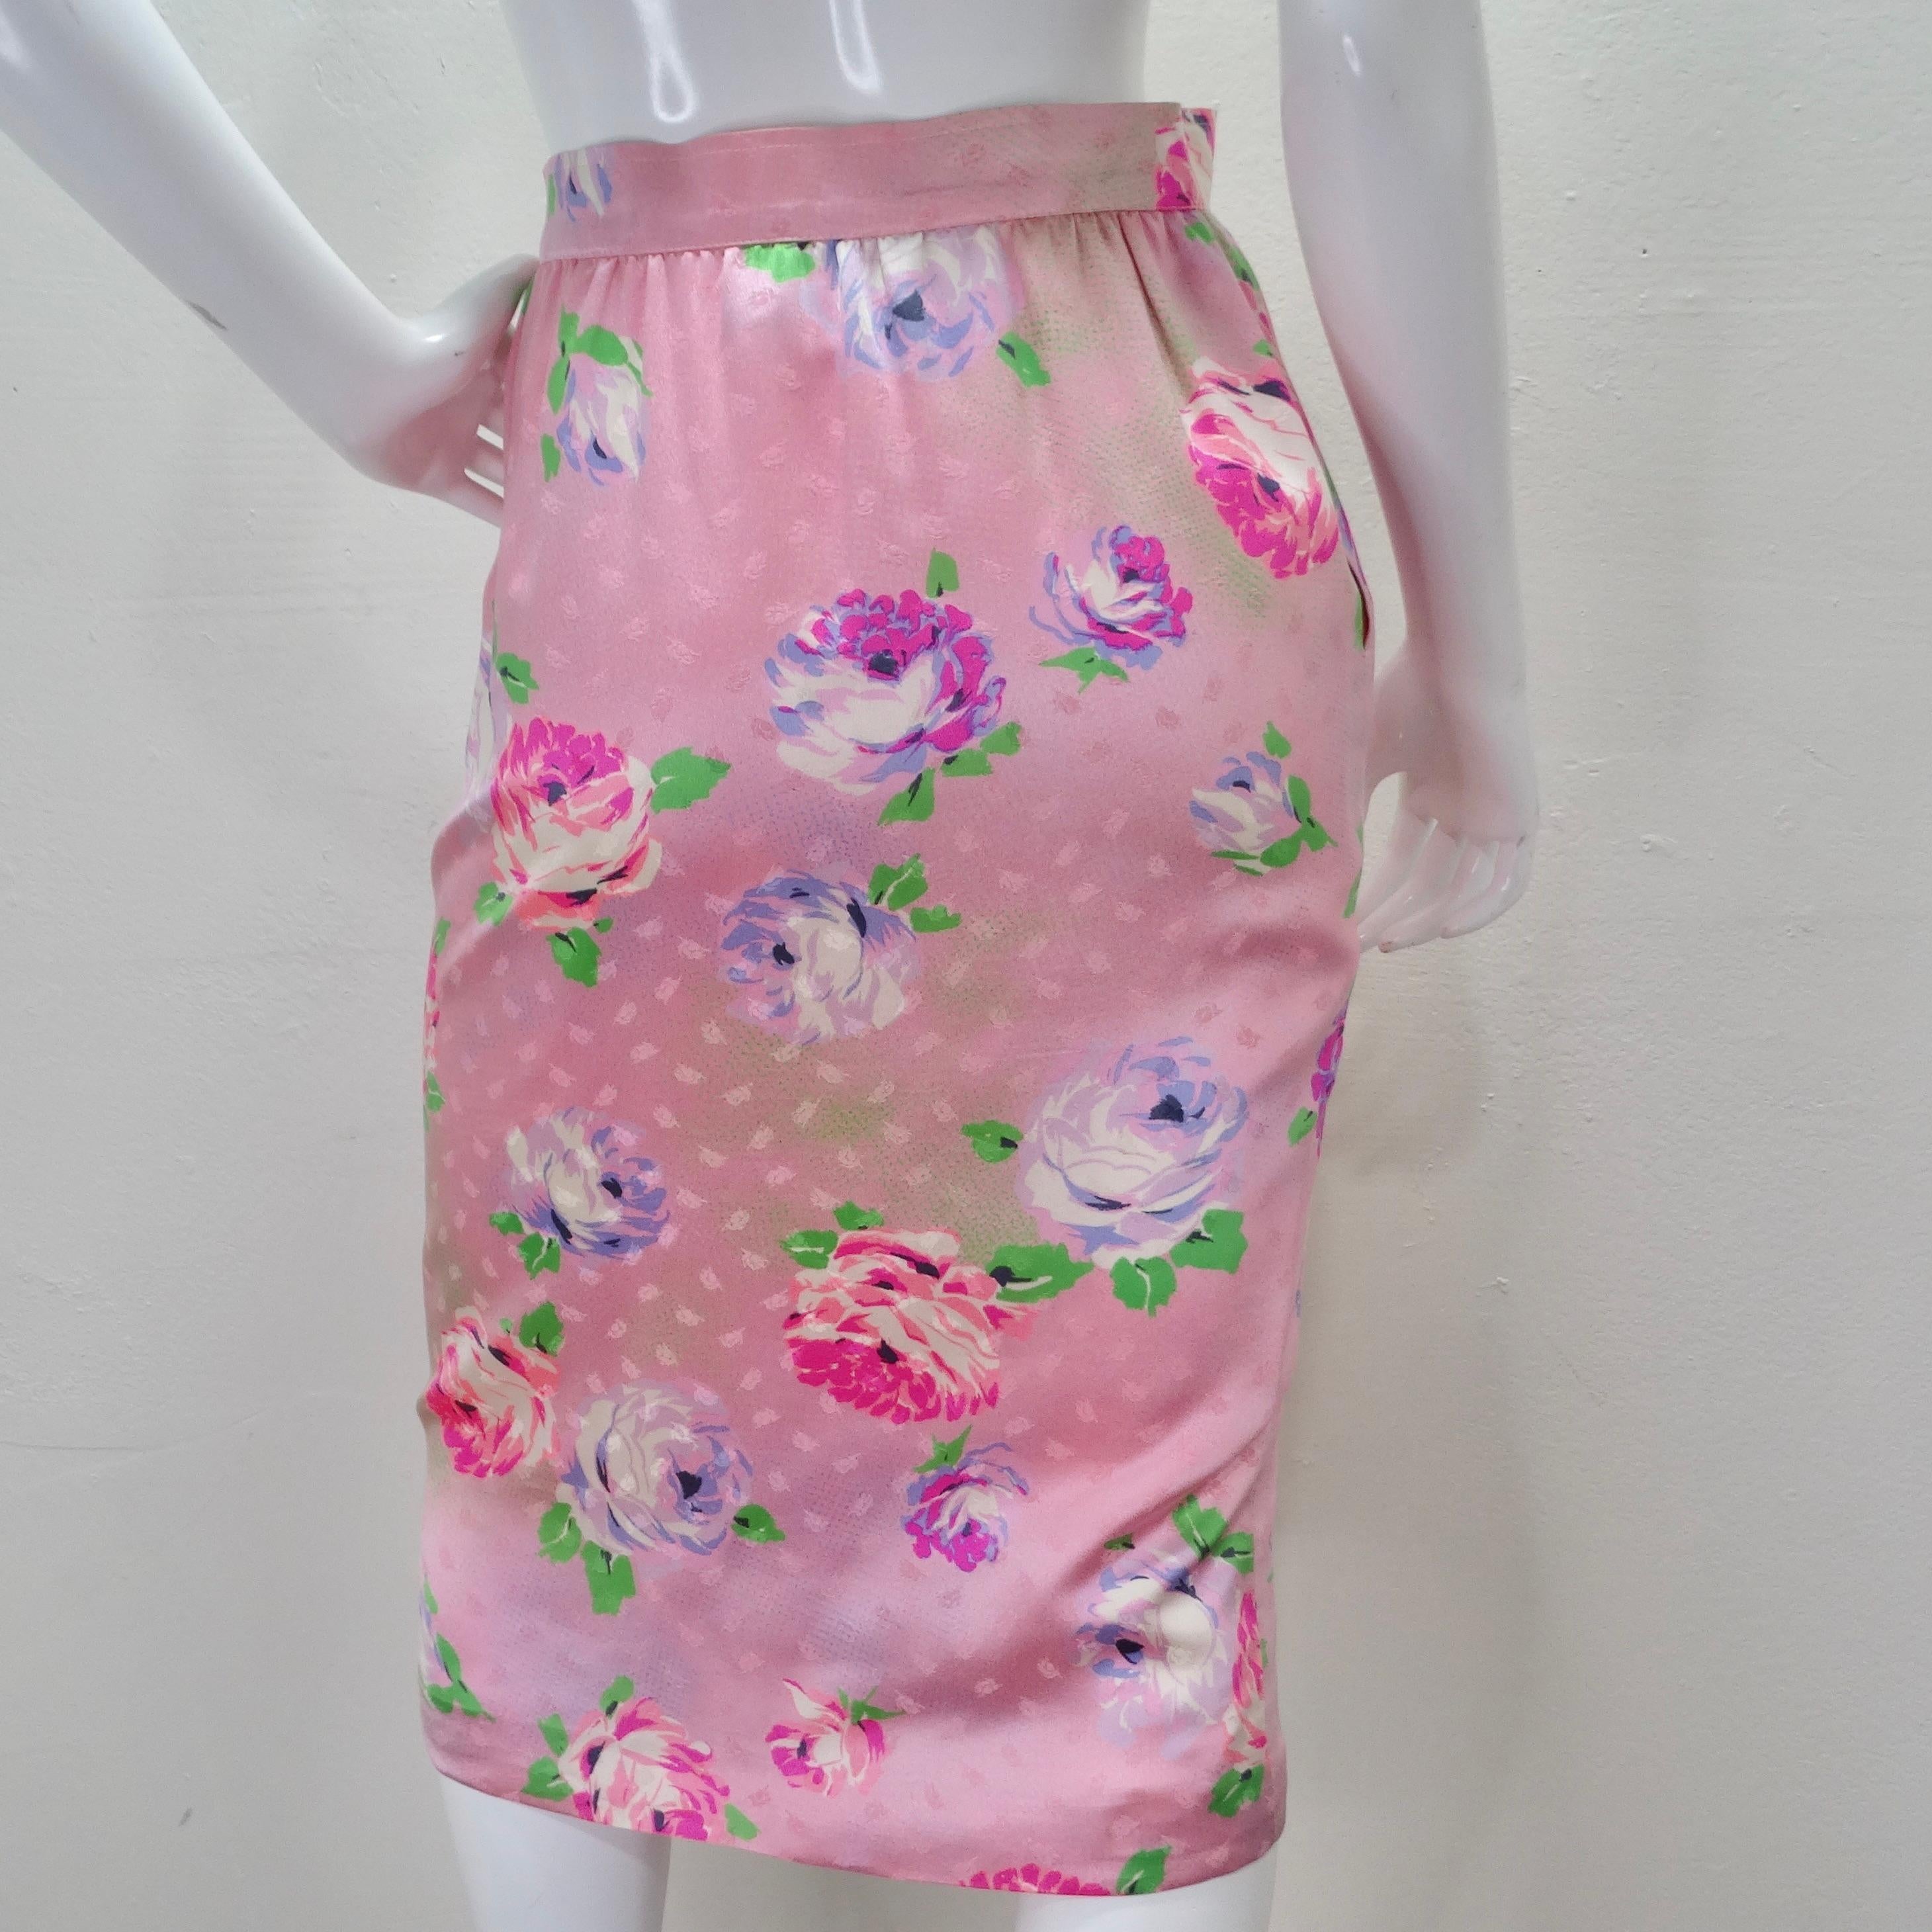 Emanuel Ungaro 1980s Pink Floral Pencil Skirt In Excellent Condition For Sale In Scottsdale, AZ